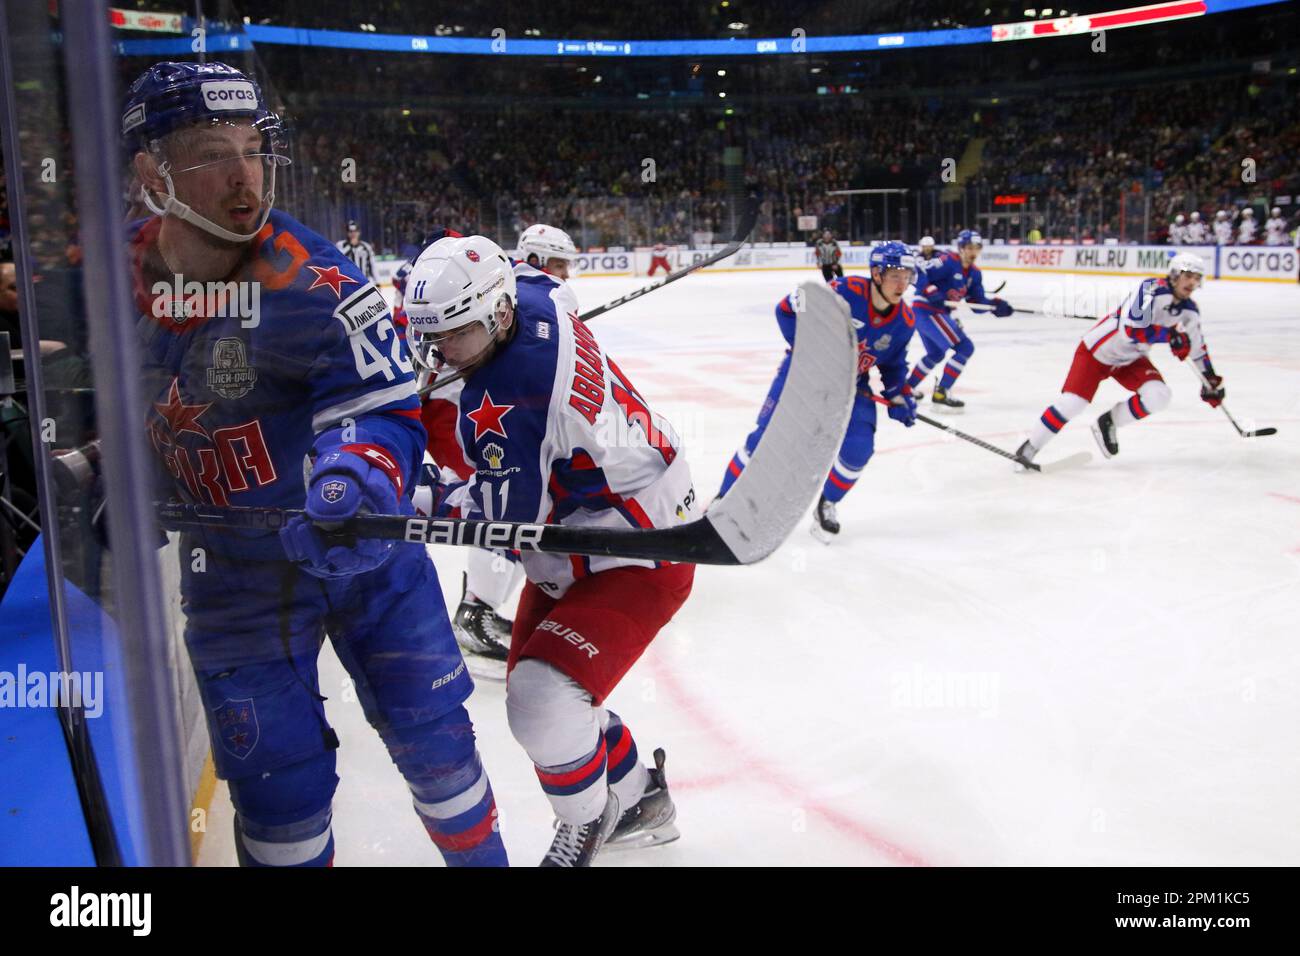 Moscow ice hockey match between moscow -Fotos und -Bildmaterial in hoher Auflösung